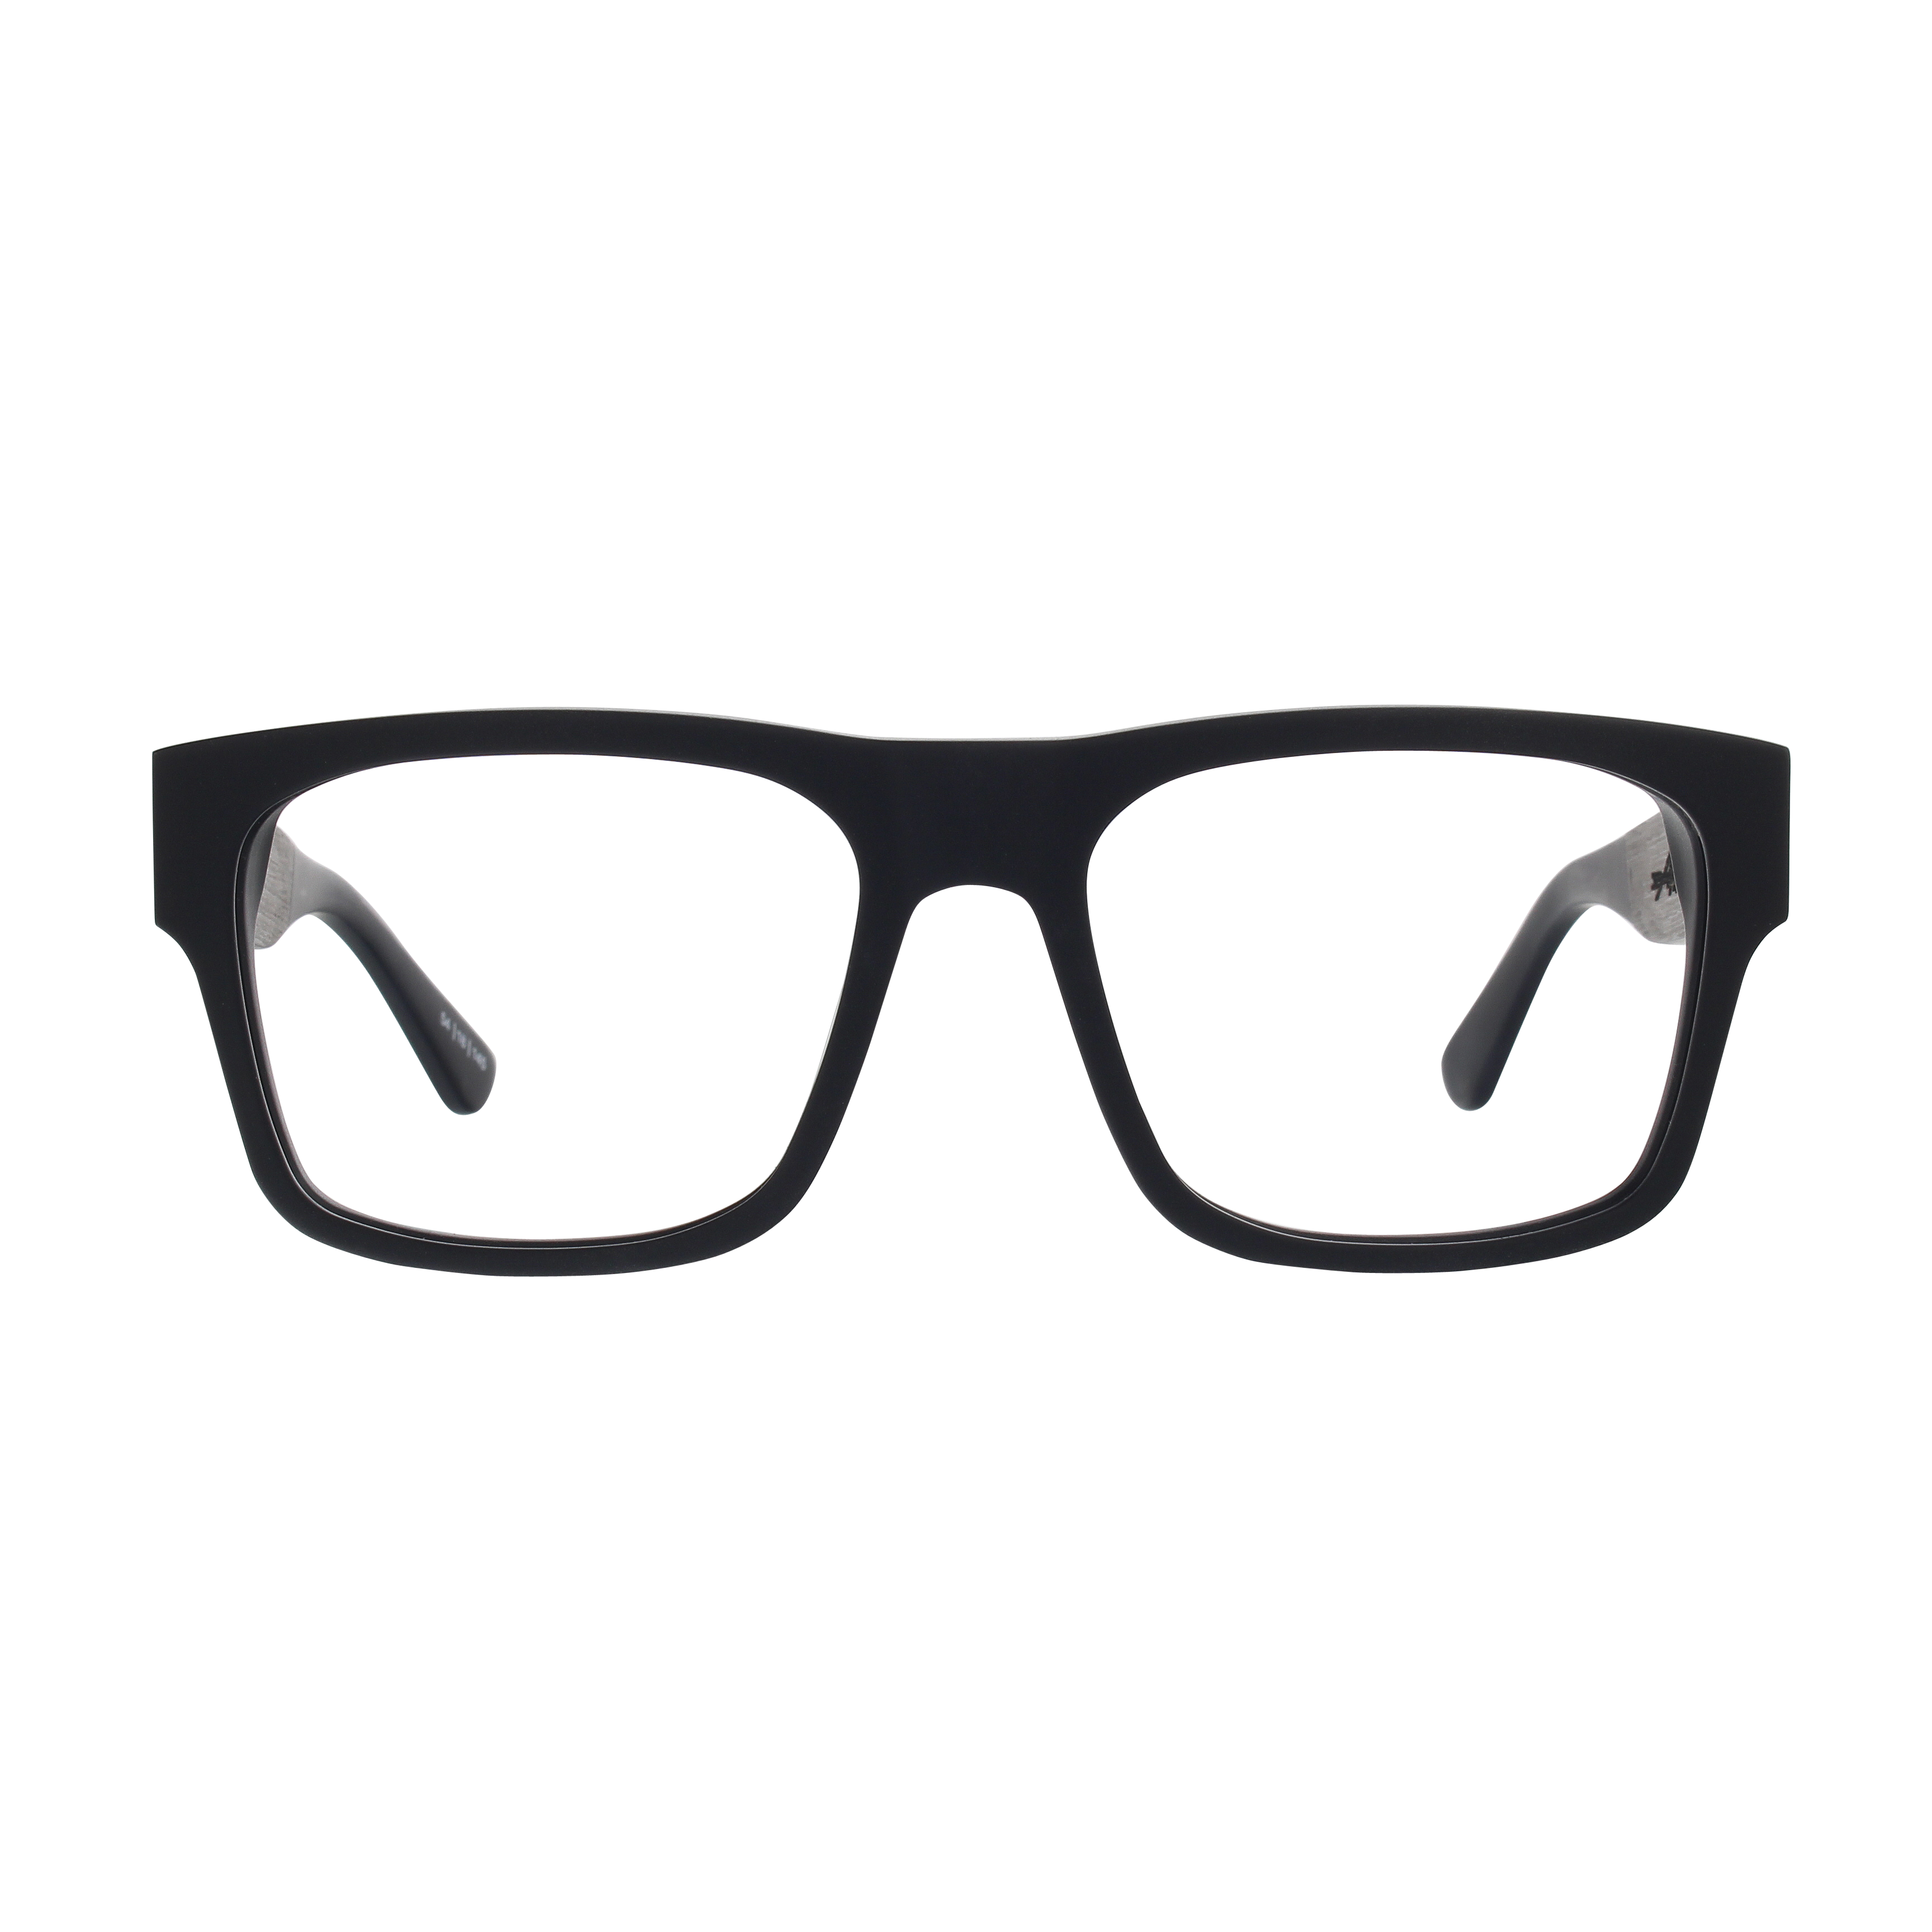 ARROW Frame - Matte Black - Eyeglasses Frame - Johnny Fly Eyewear 